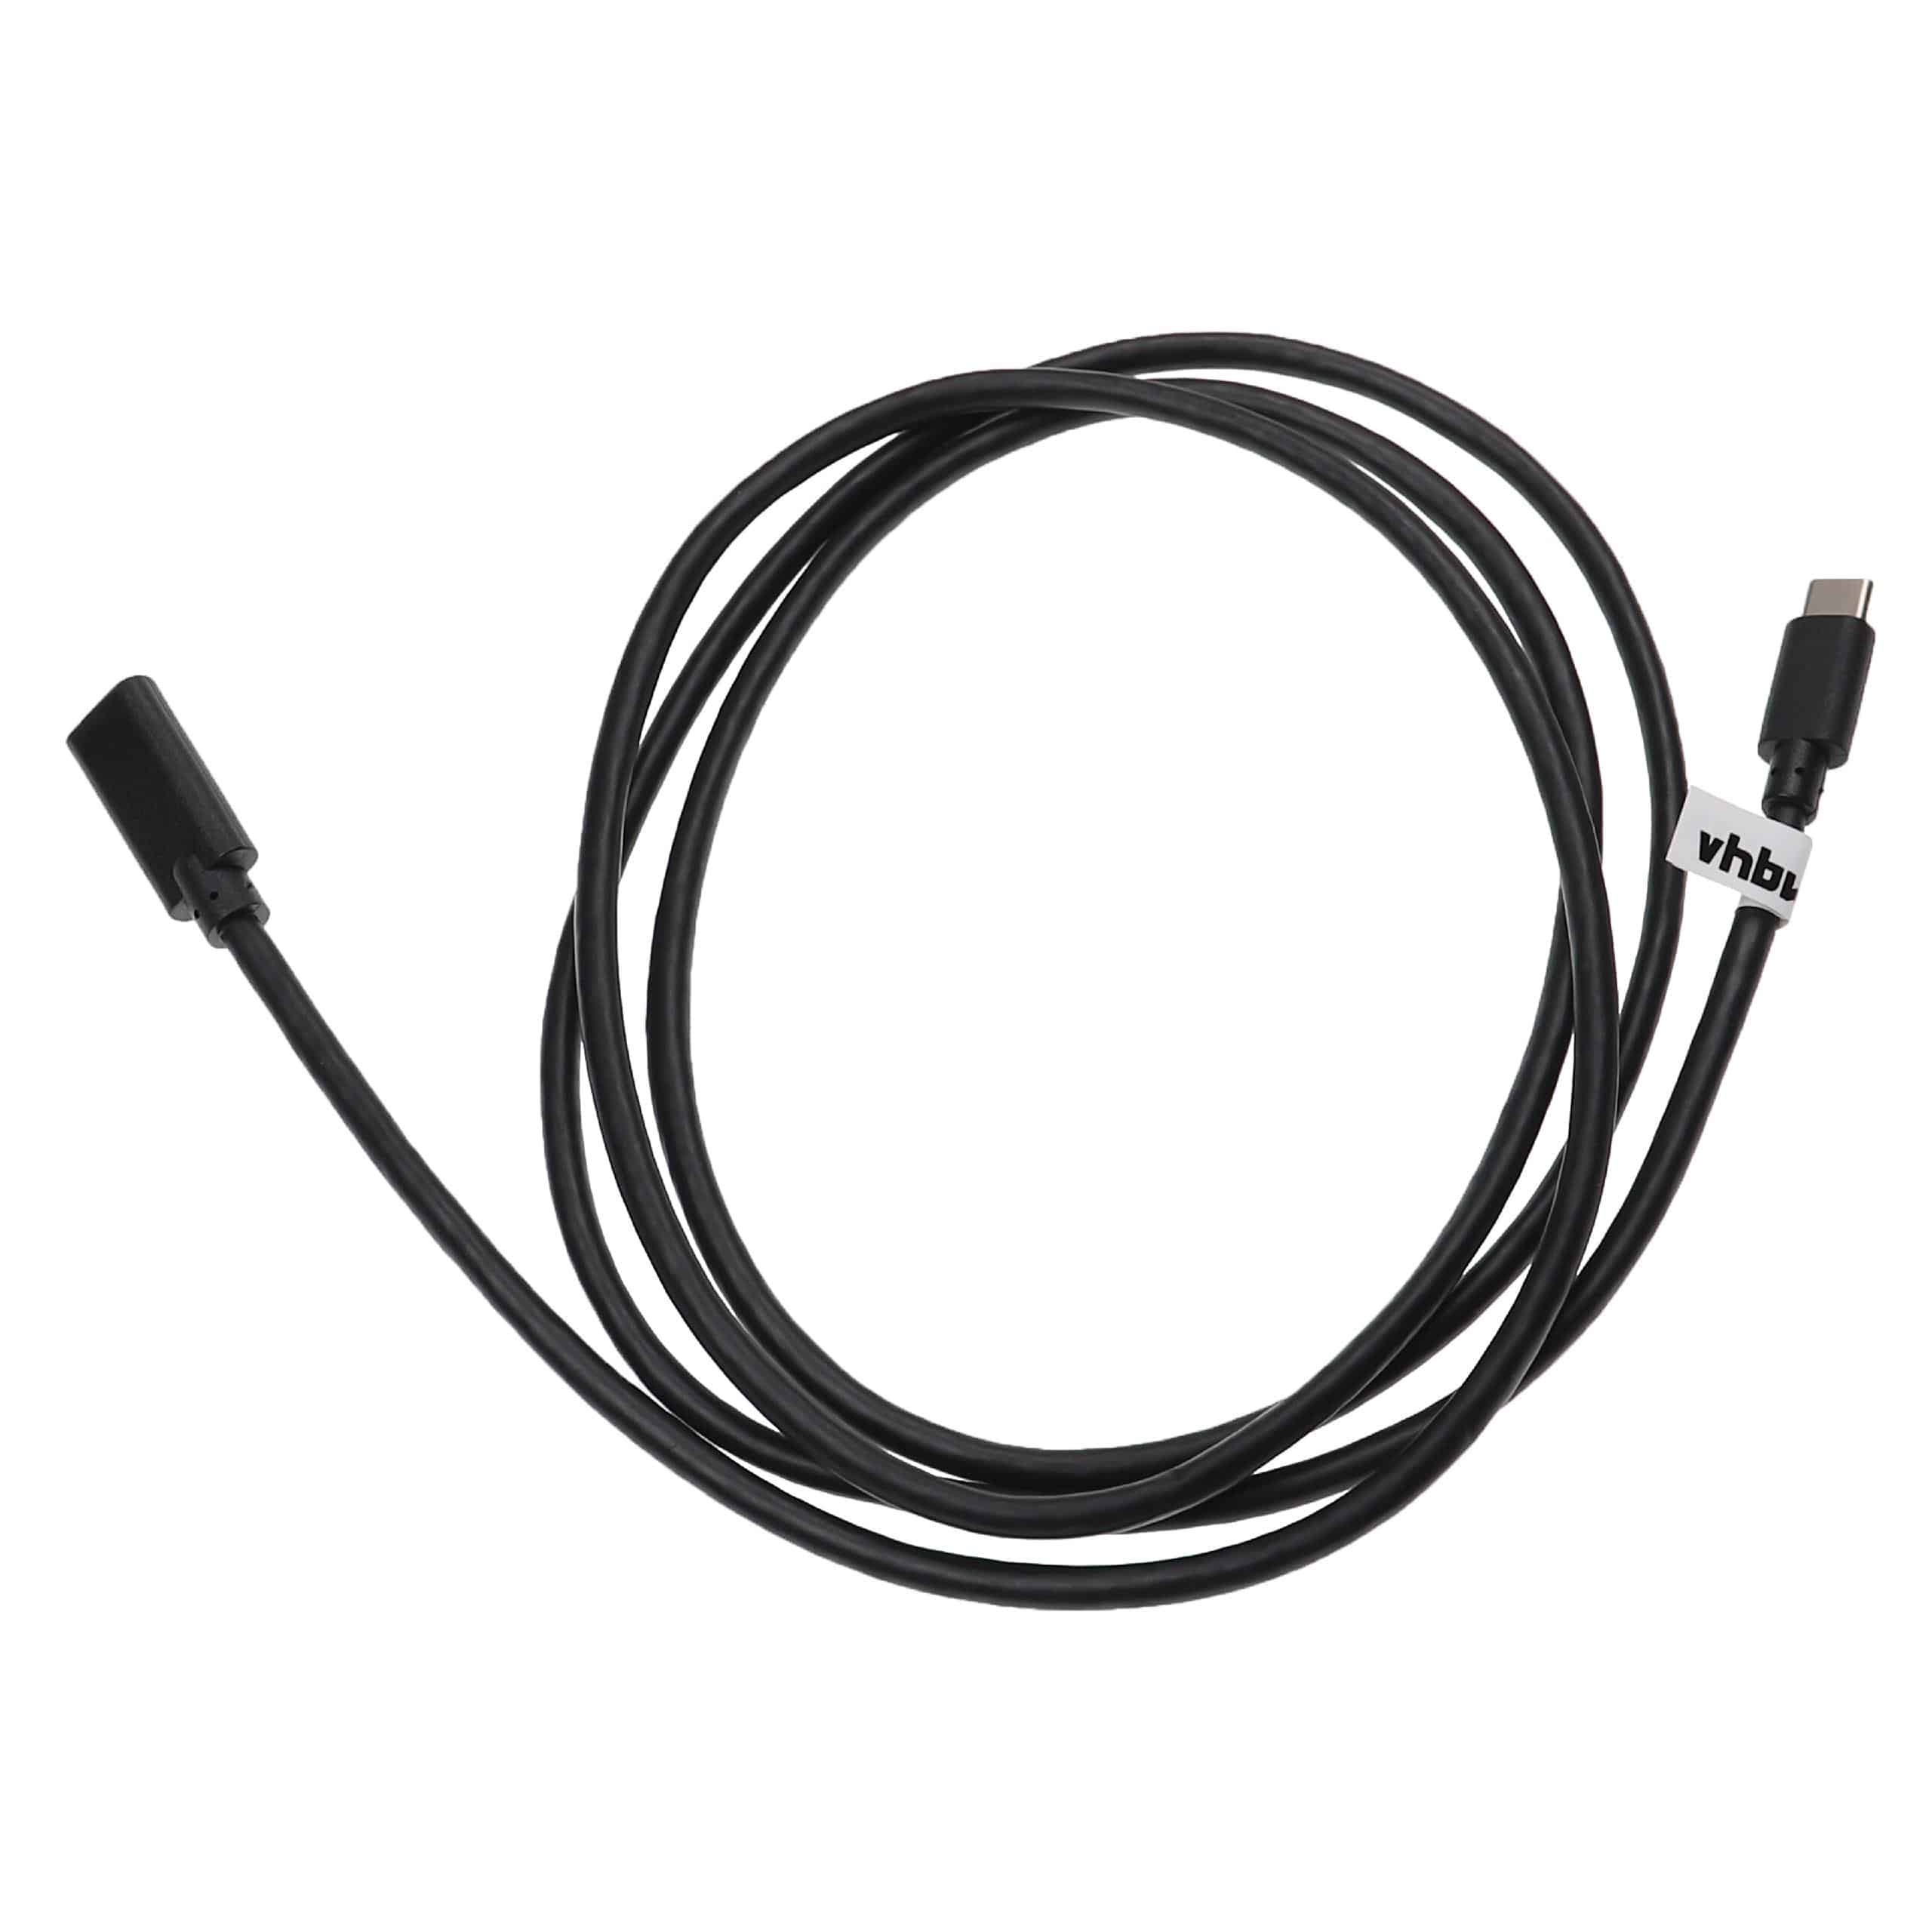 Cable alargador USB-C para diversas tablets, notebooks - 1,5 m negro, cable USB 3.1 C